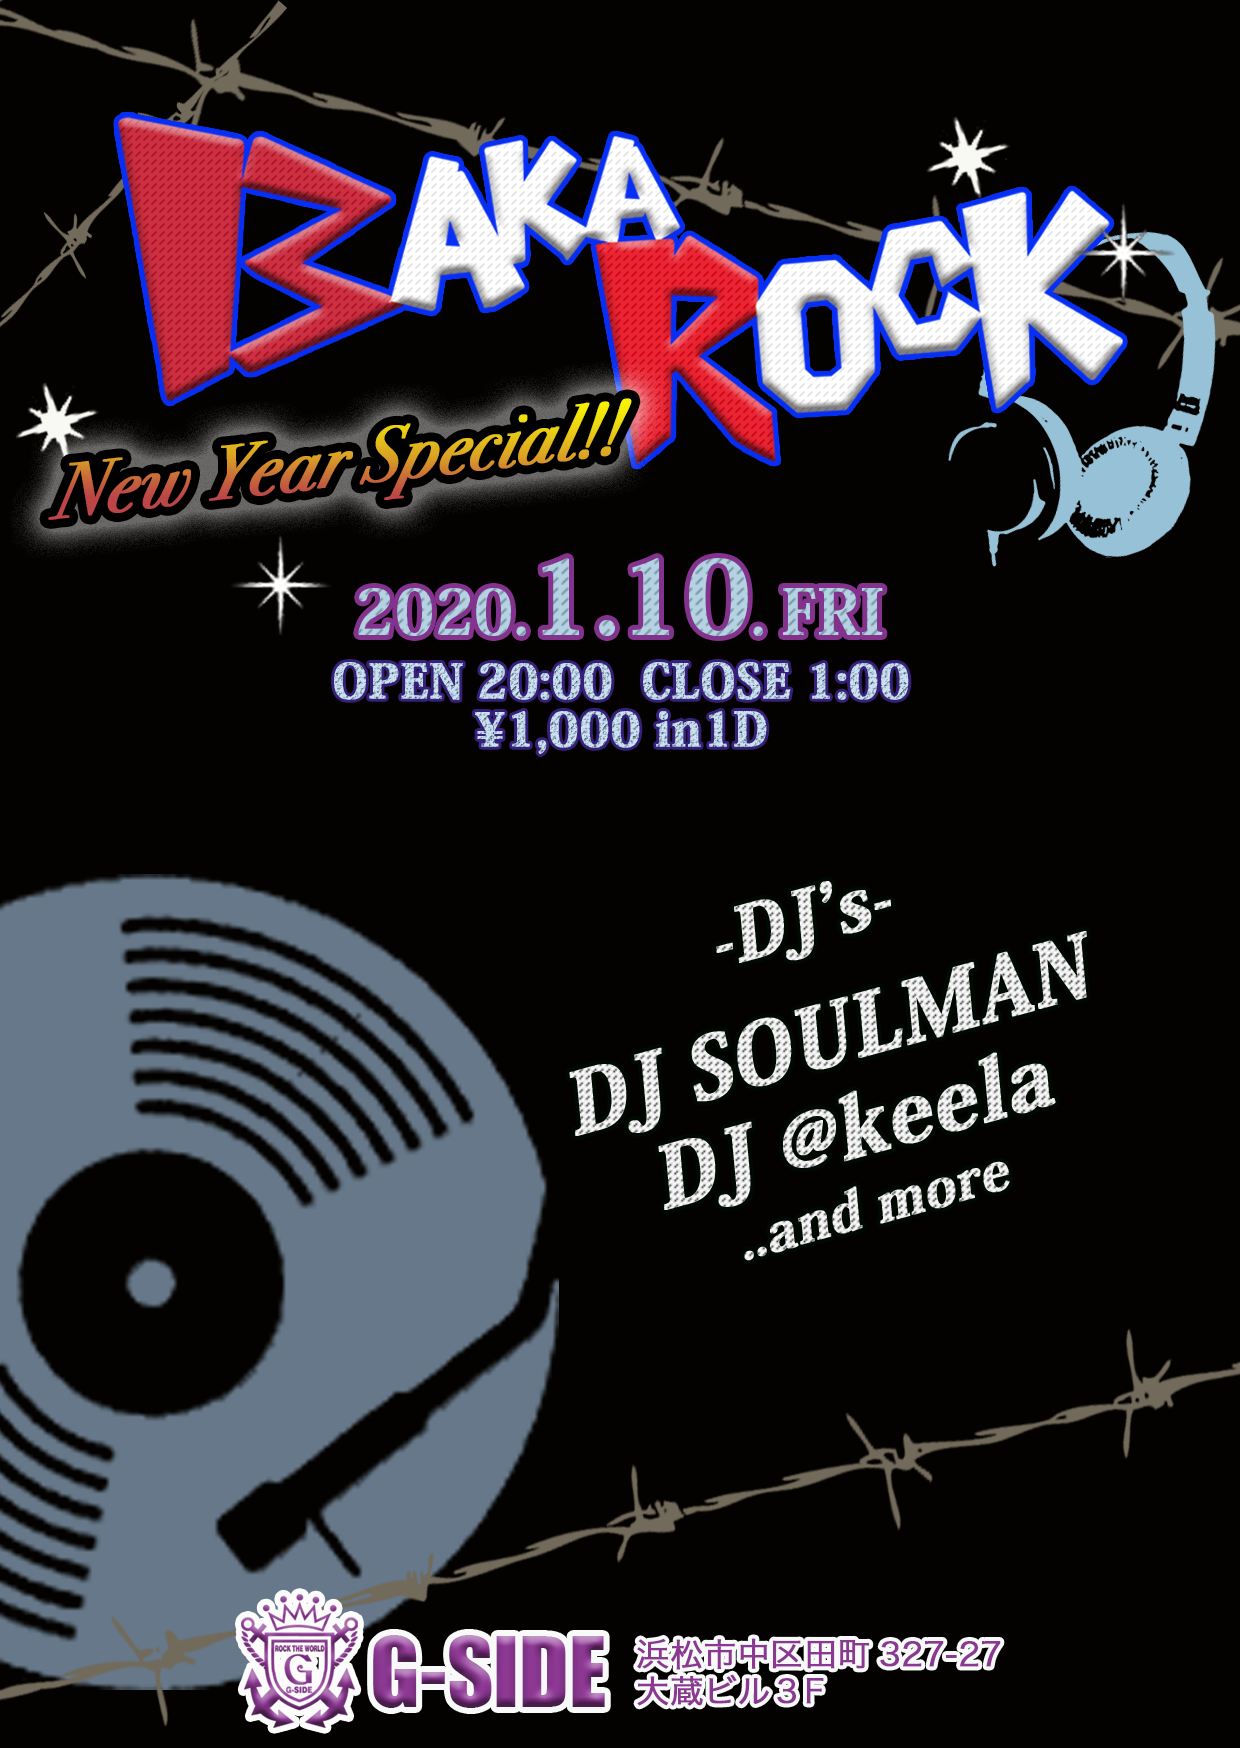 BAKA ROCK New Year Special!